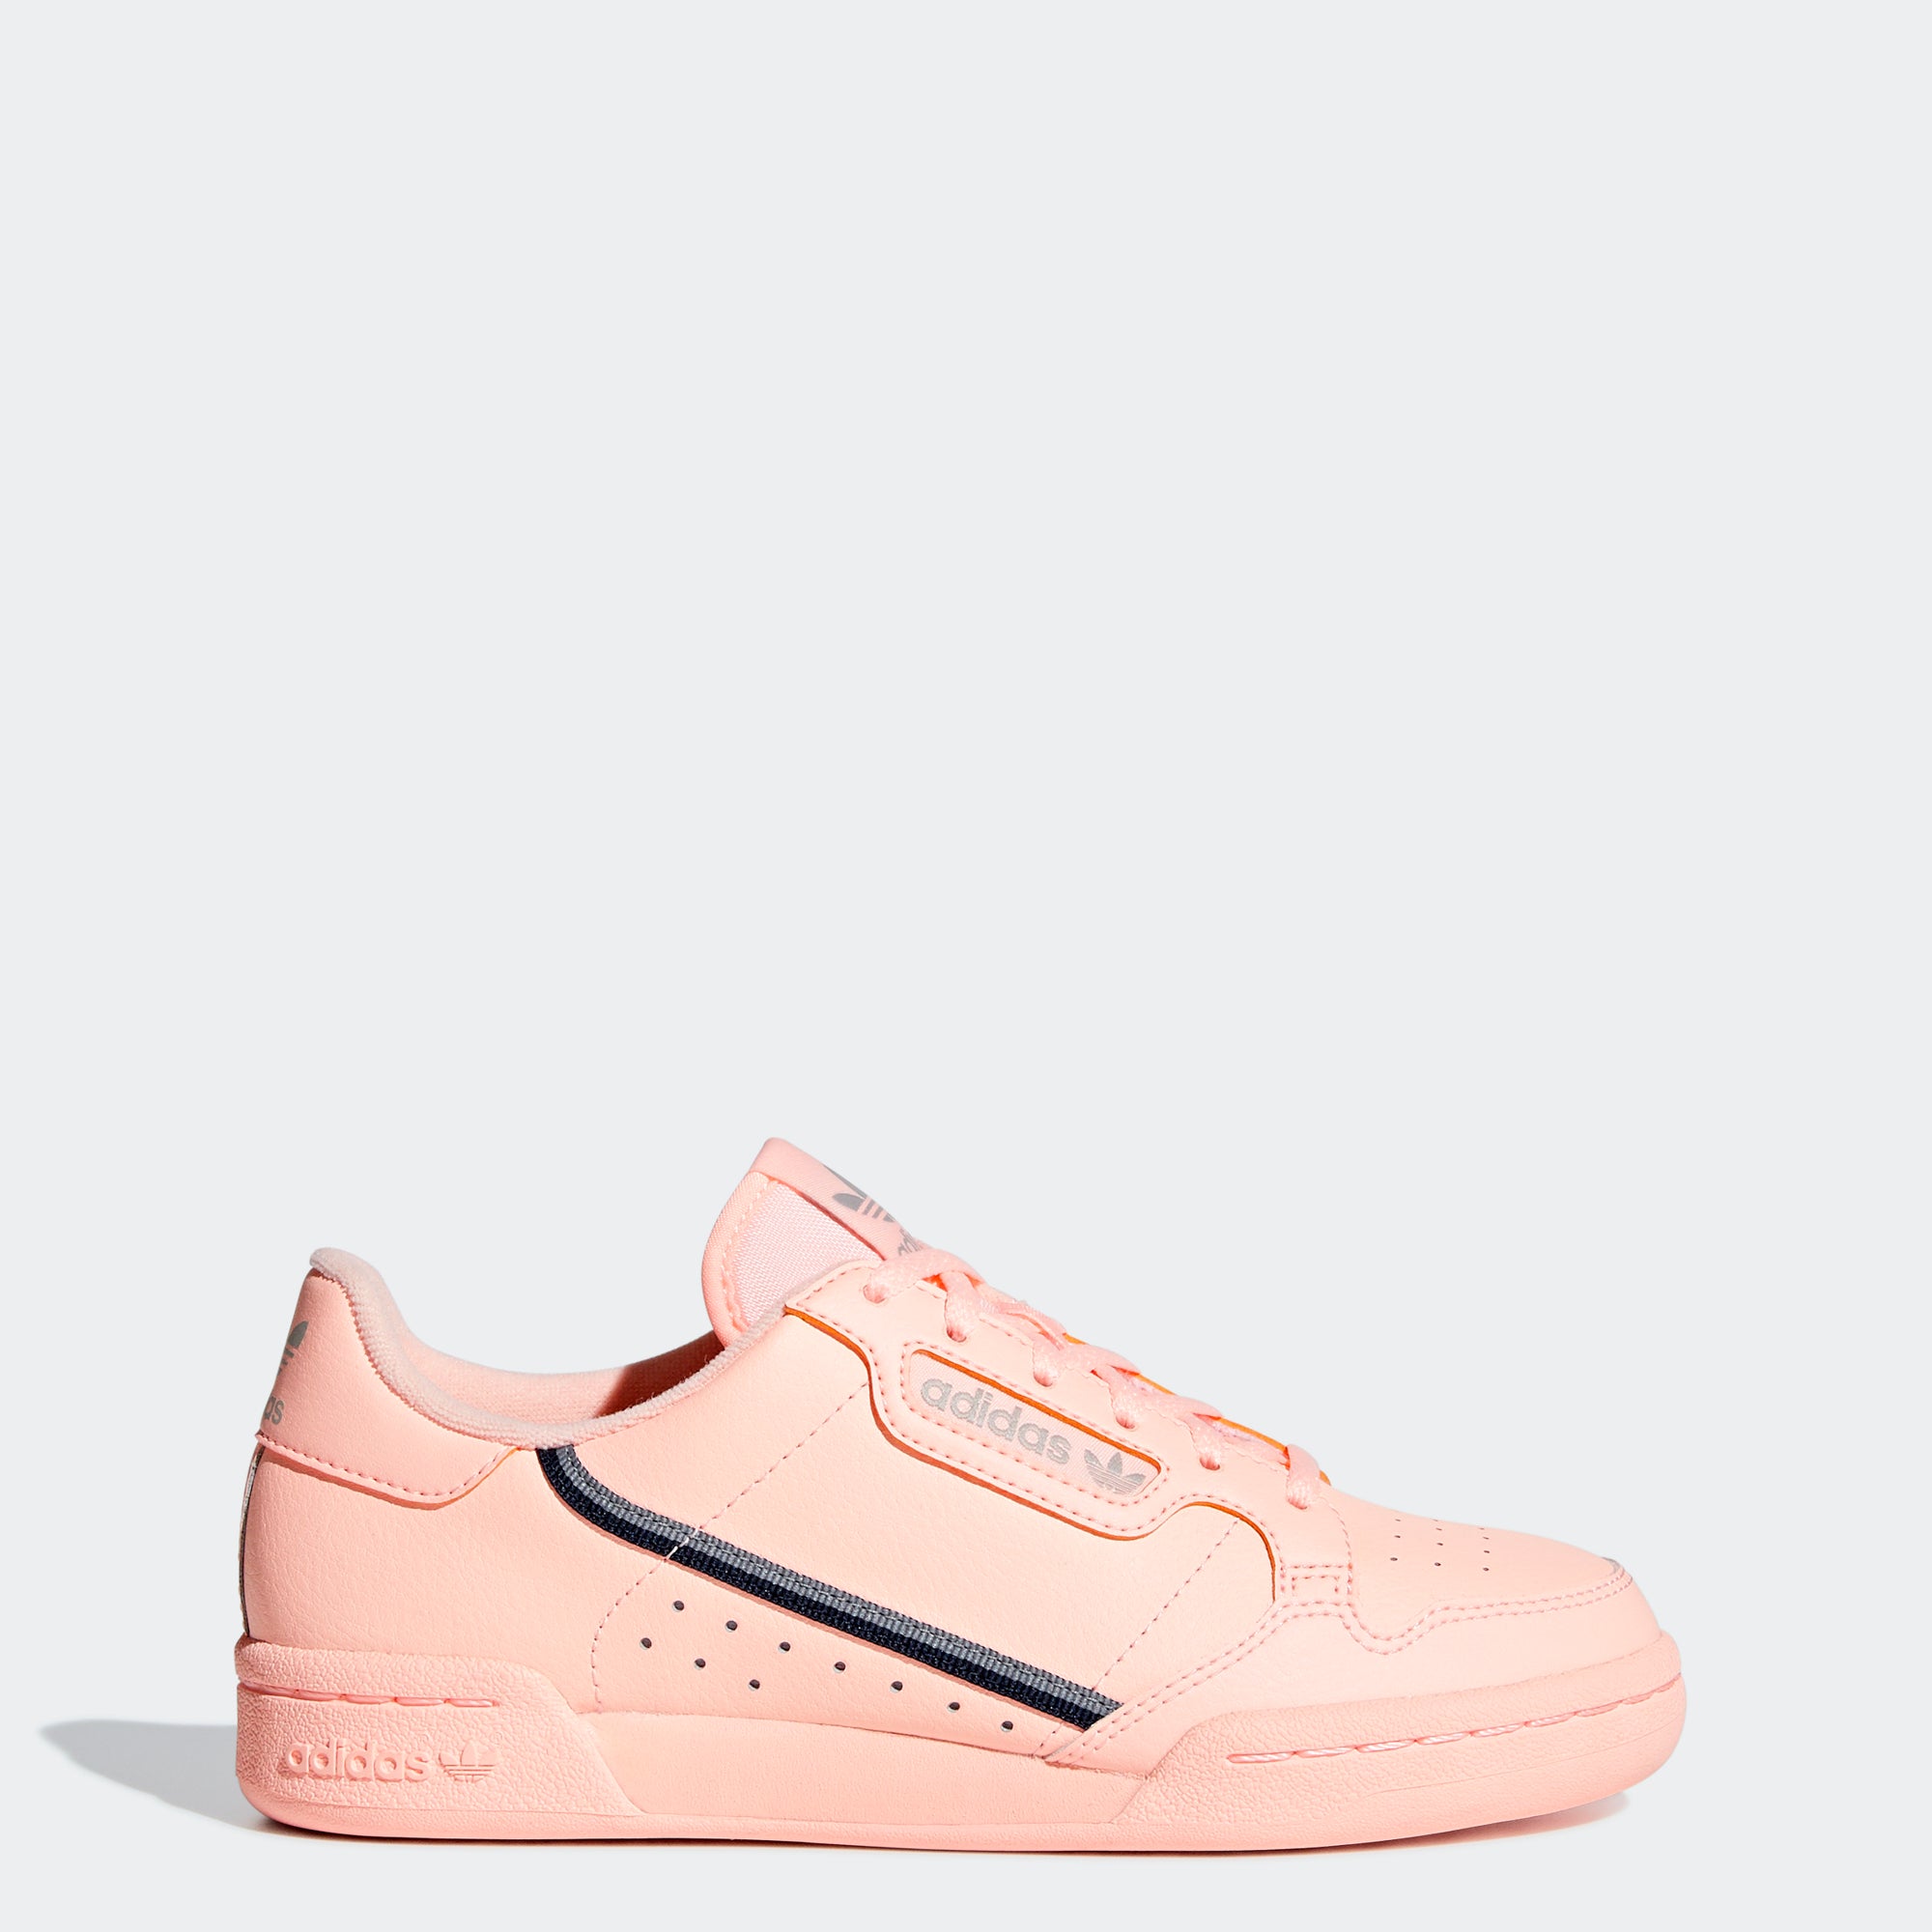 adidas clear orange shoes